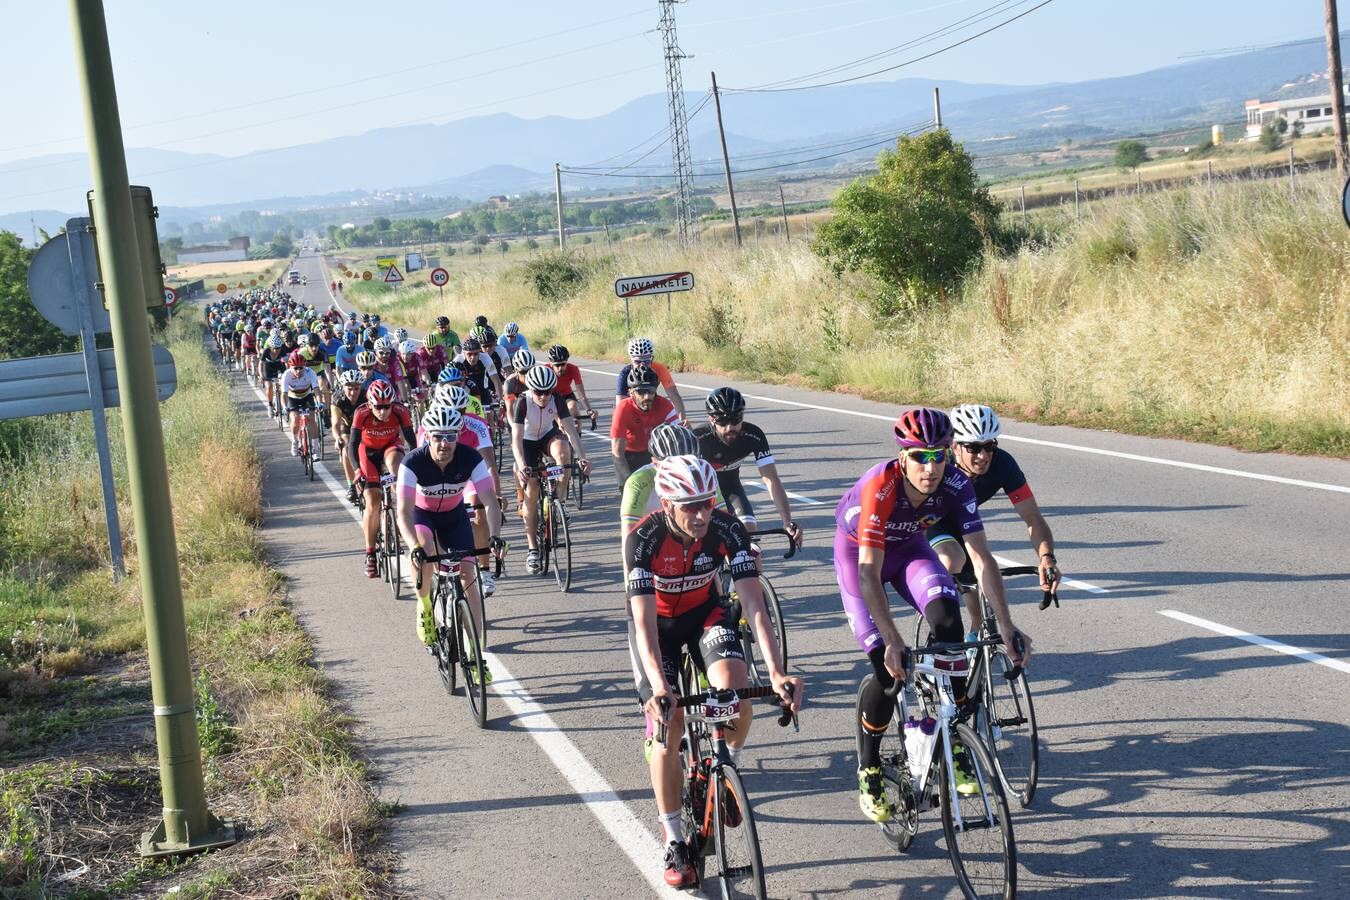 Fotos: La tercera cicloturista de La Rioja